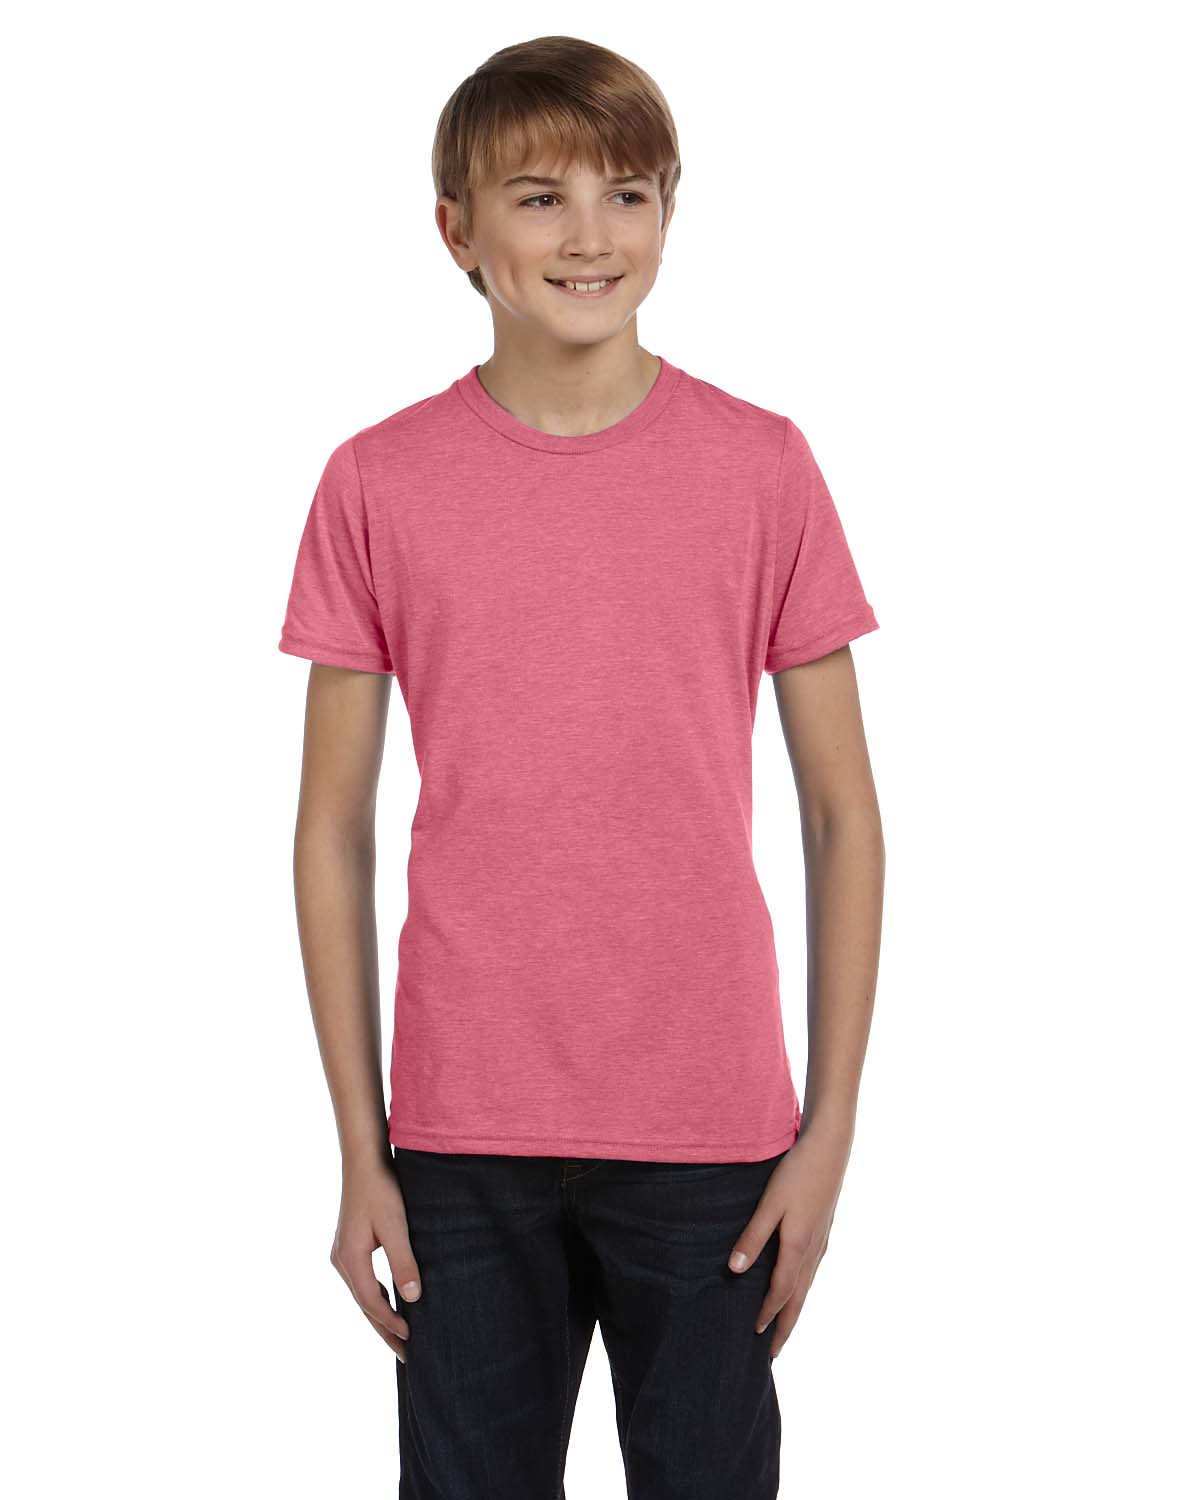 Bella Youth Jersey Short-sleeve T-shirt